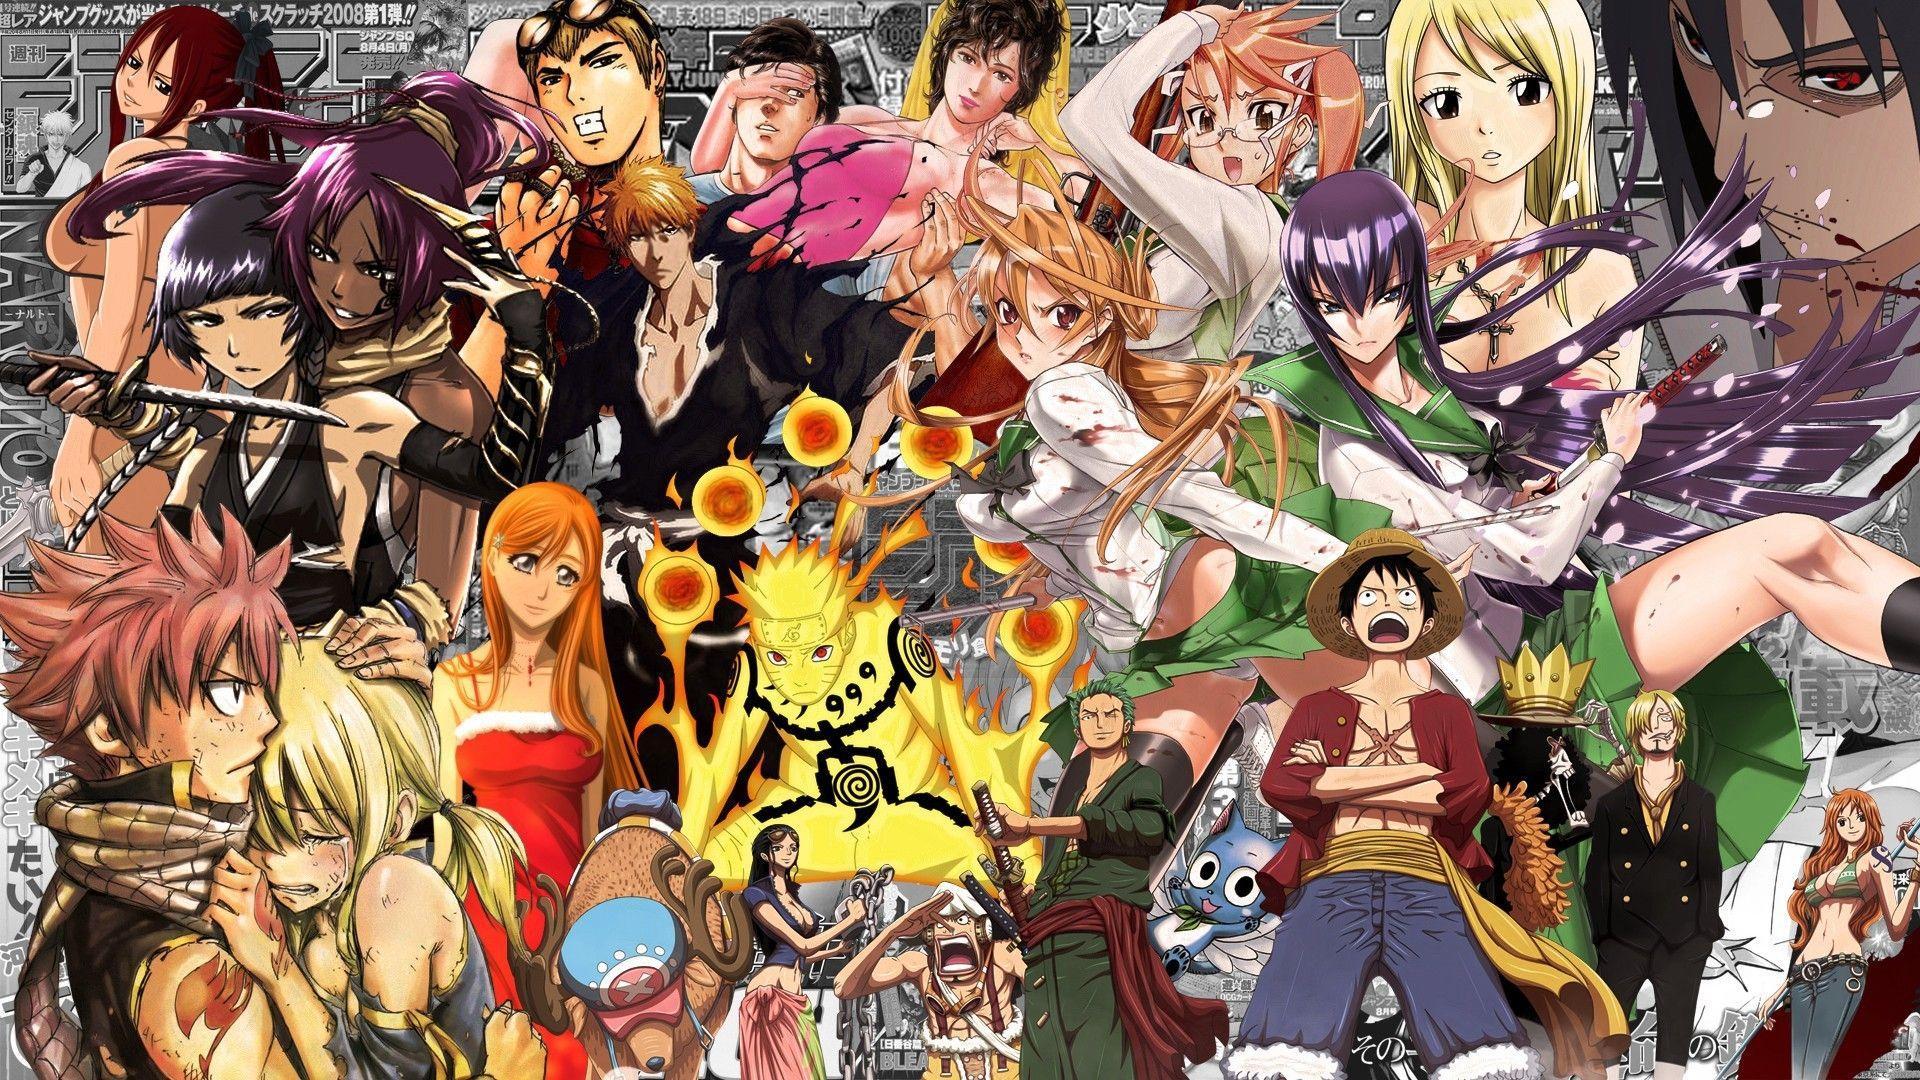 Heroes manga anime Highschool DxD wallpaper and image